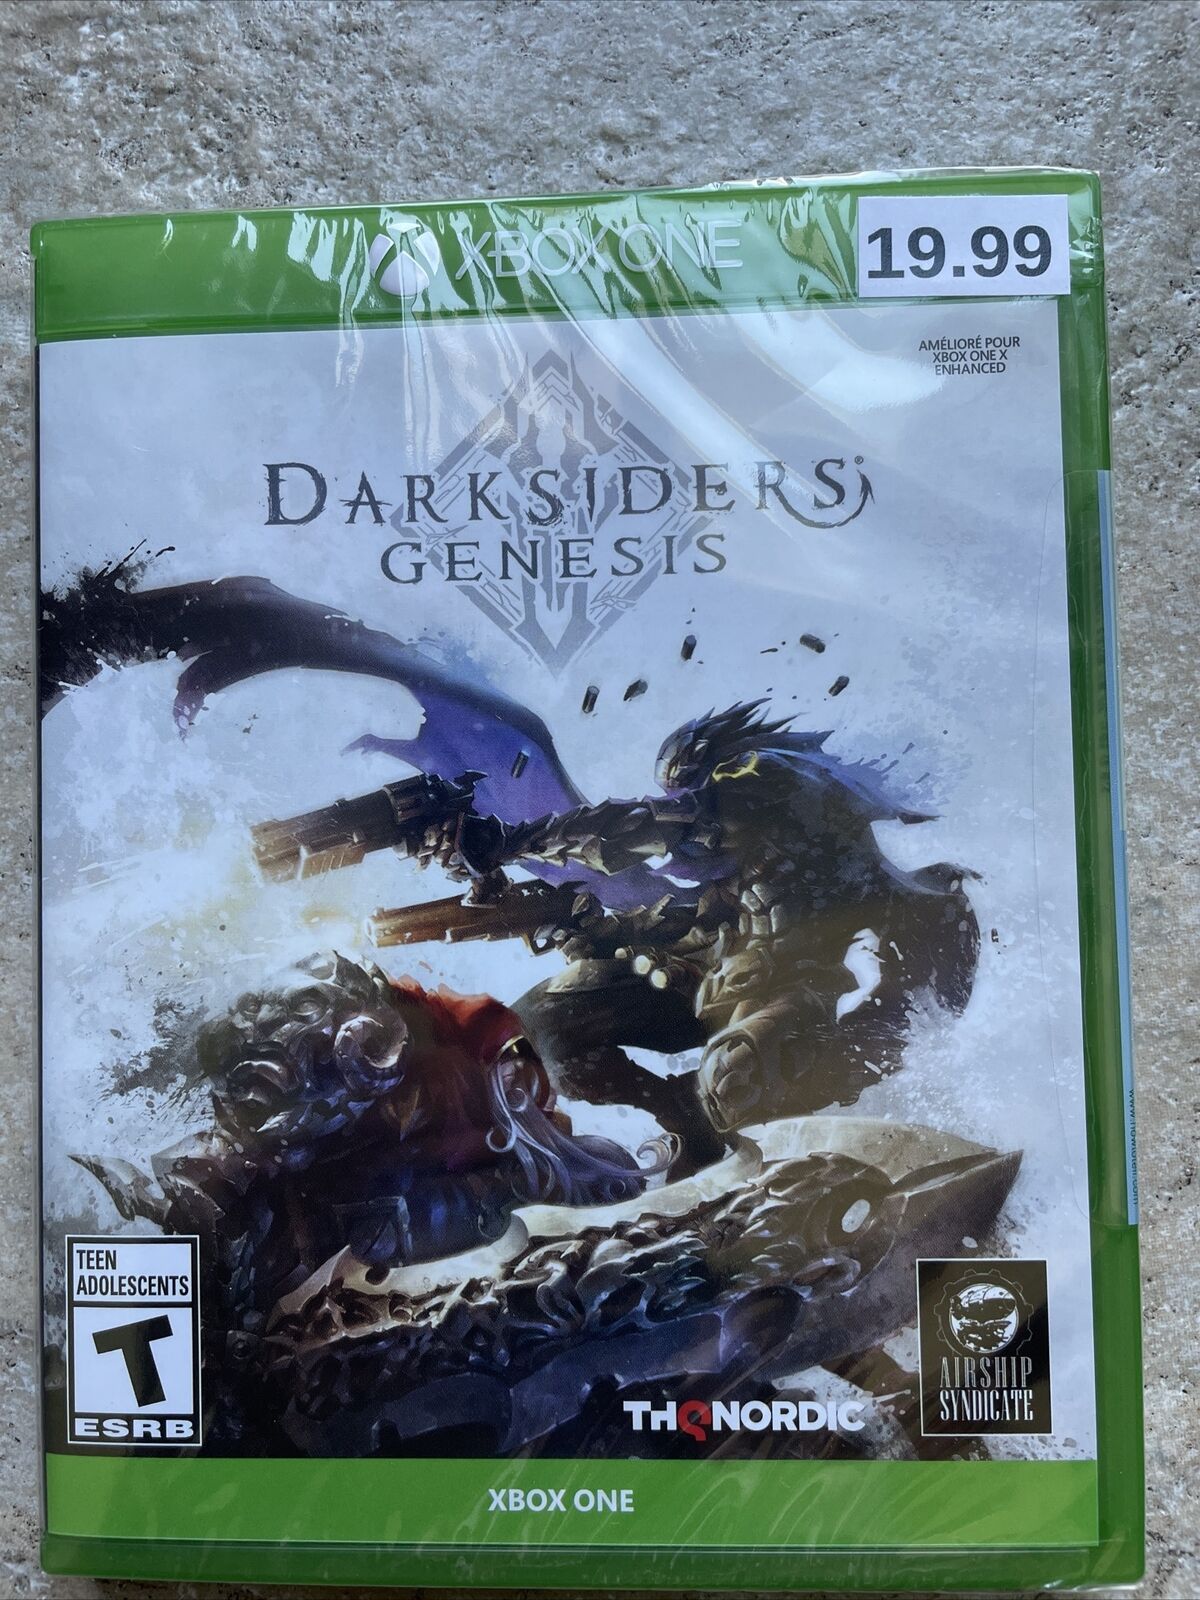 veel plezier Archeoloog dwaas NEW- Darksiders Genesis - Xbox One Standard Edition, New Sealed  811994022127 | eBay